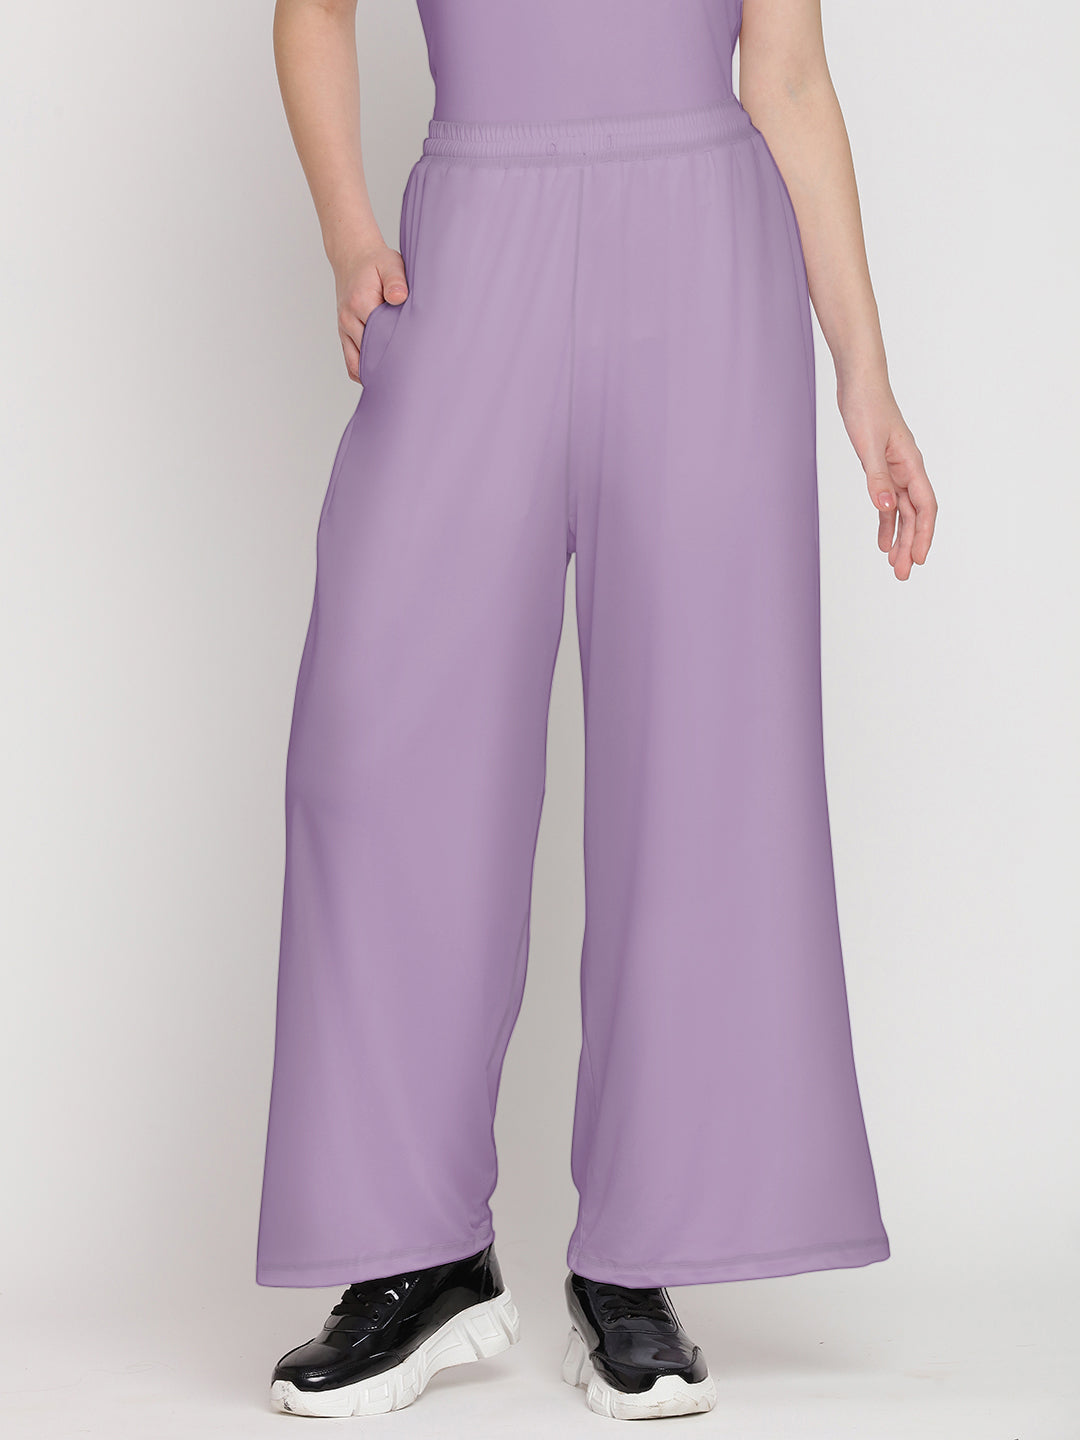 Harmony Pants -  Miami Purple